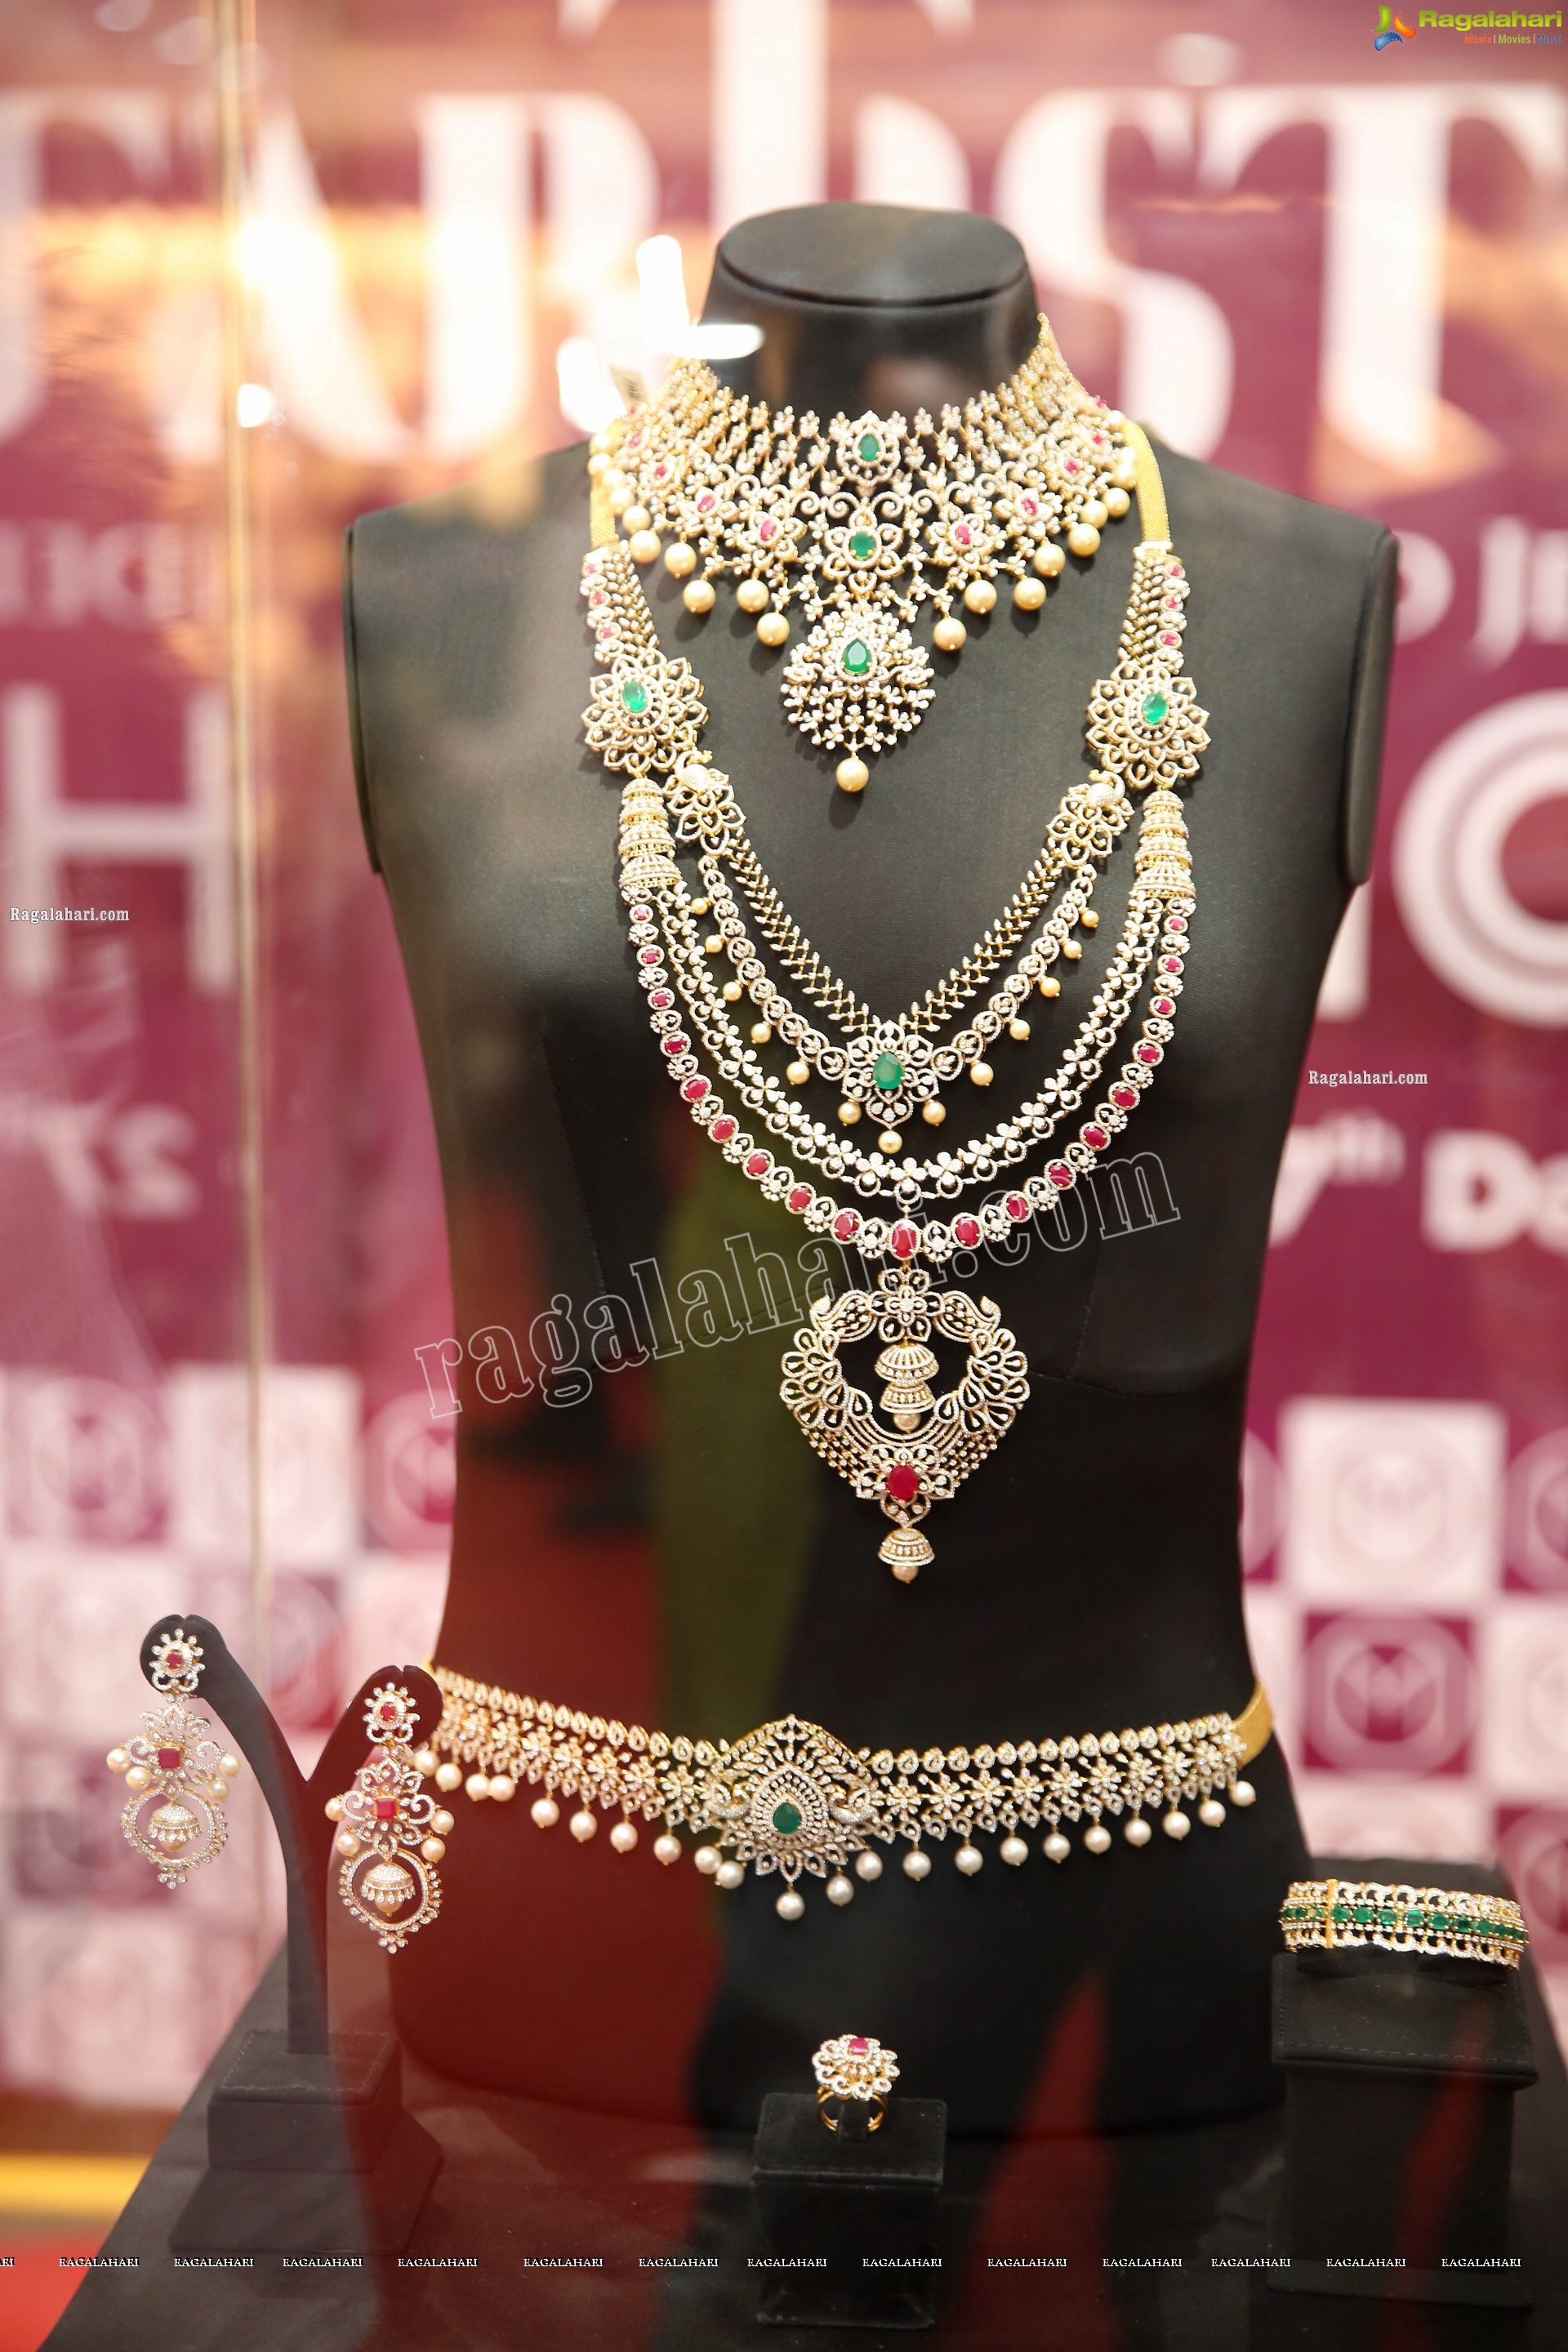 Malabar Gold & Diamonds Artistry Jewellery Showcase at Somajiguda Showroom